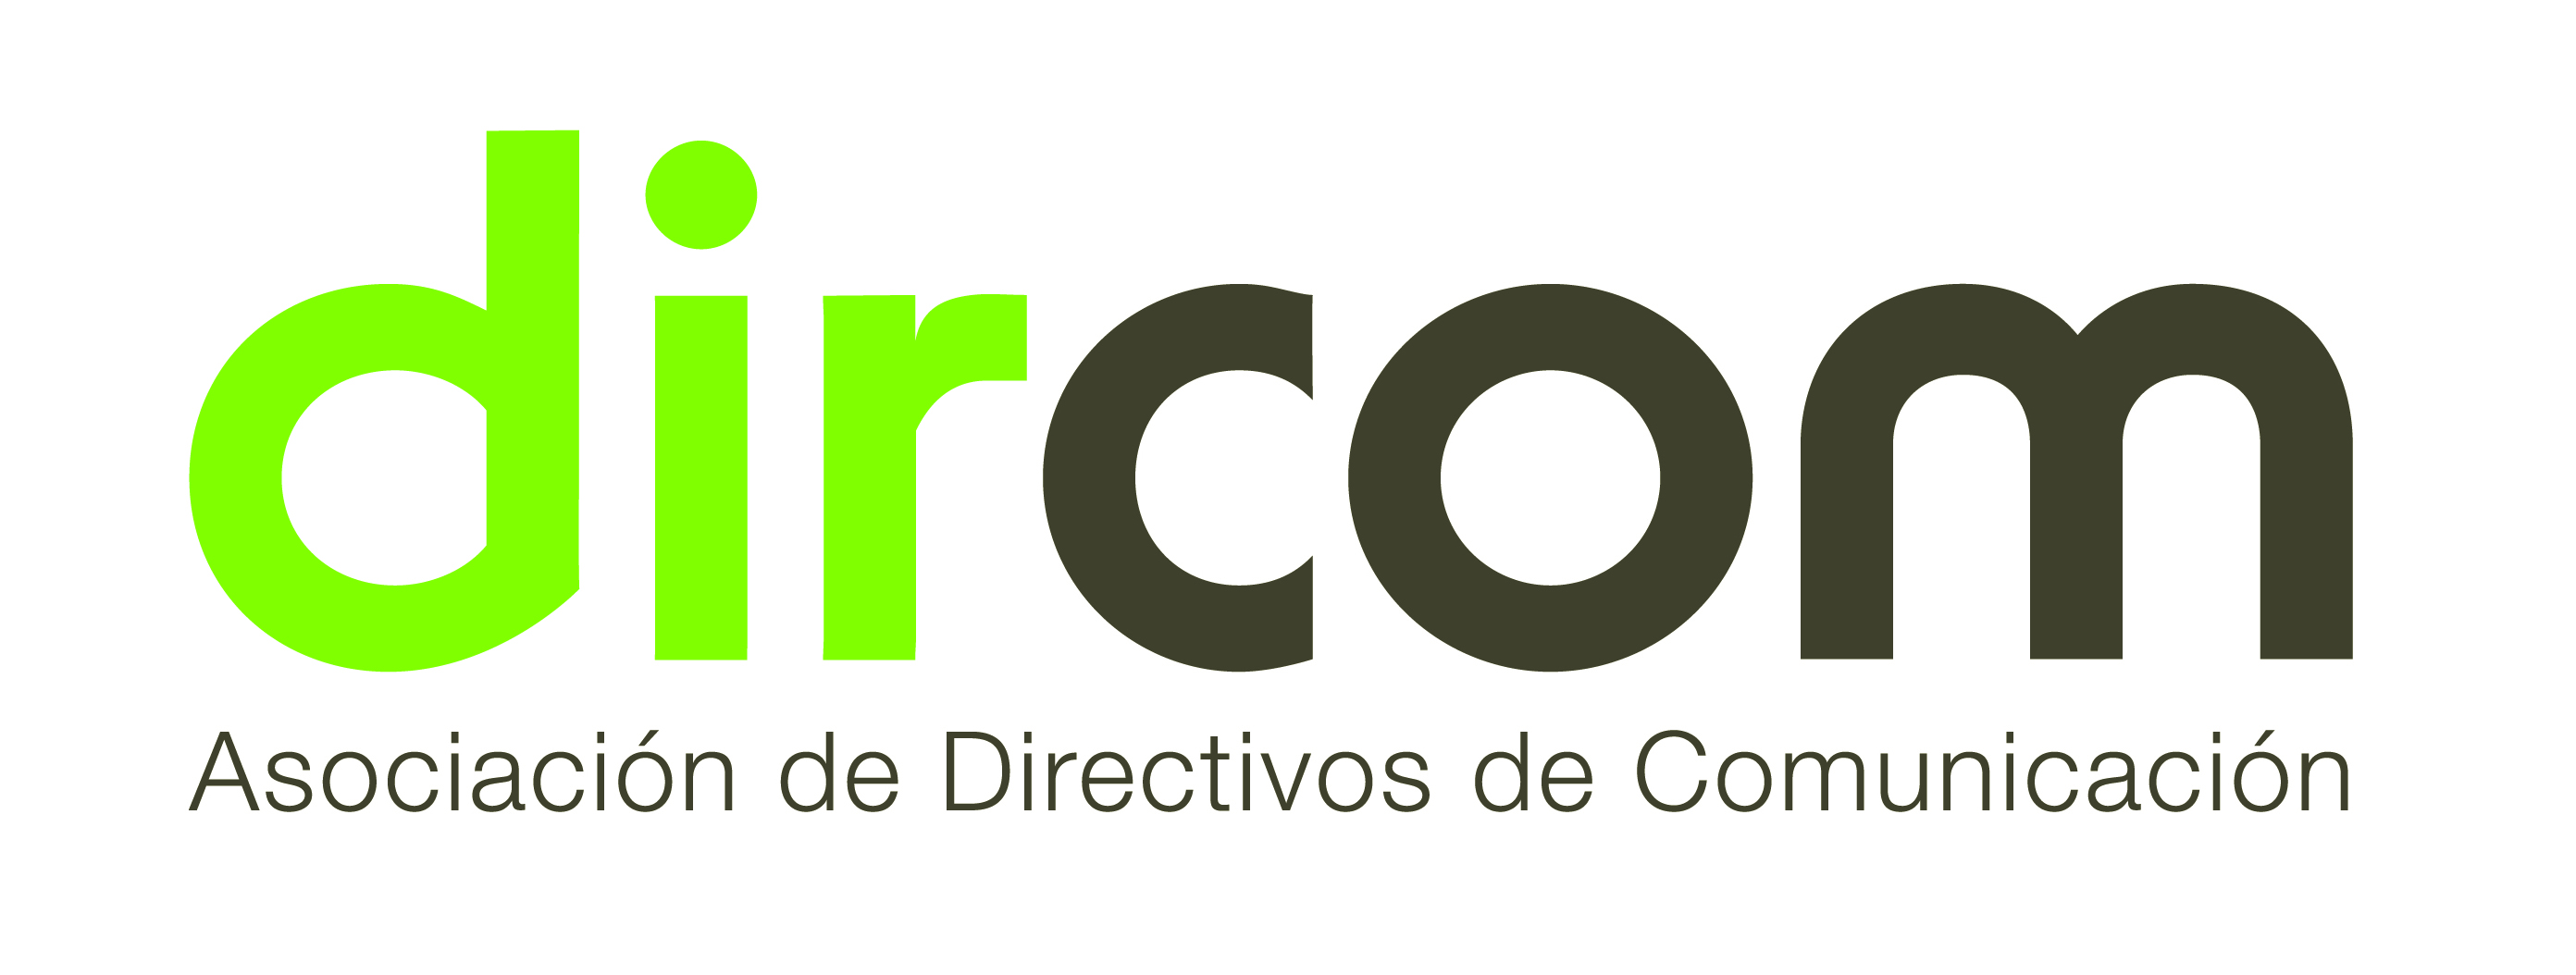 Logo Dircom